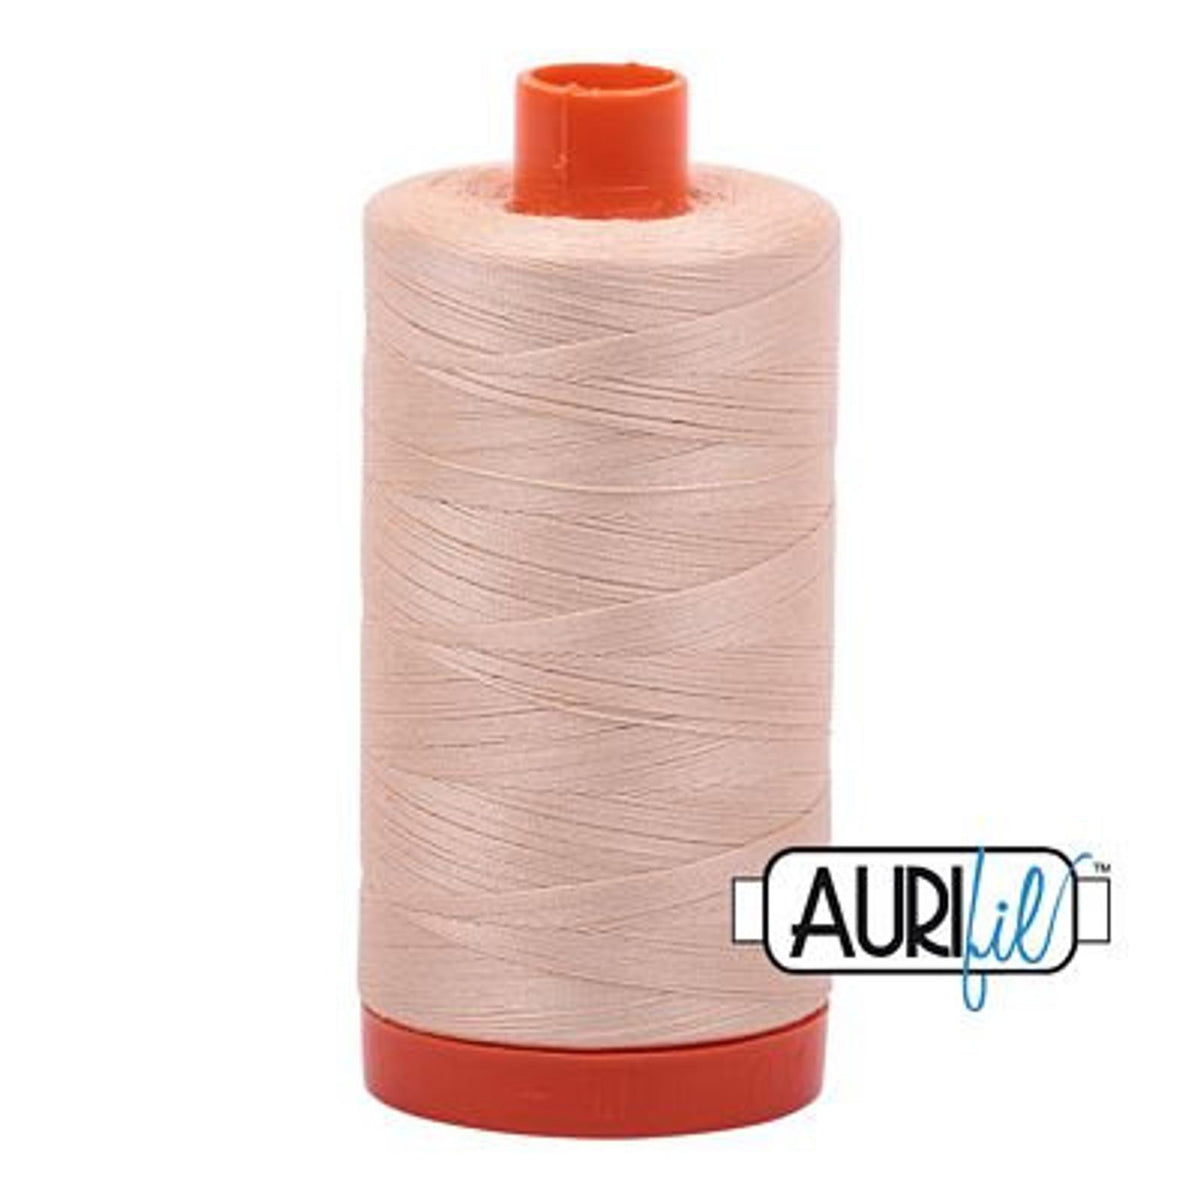 Aurifil 50 wt cotton thread, 1300m, Pale Flesh (2315)